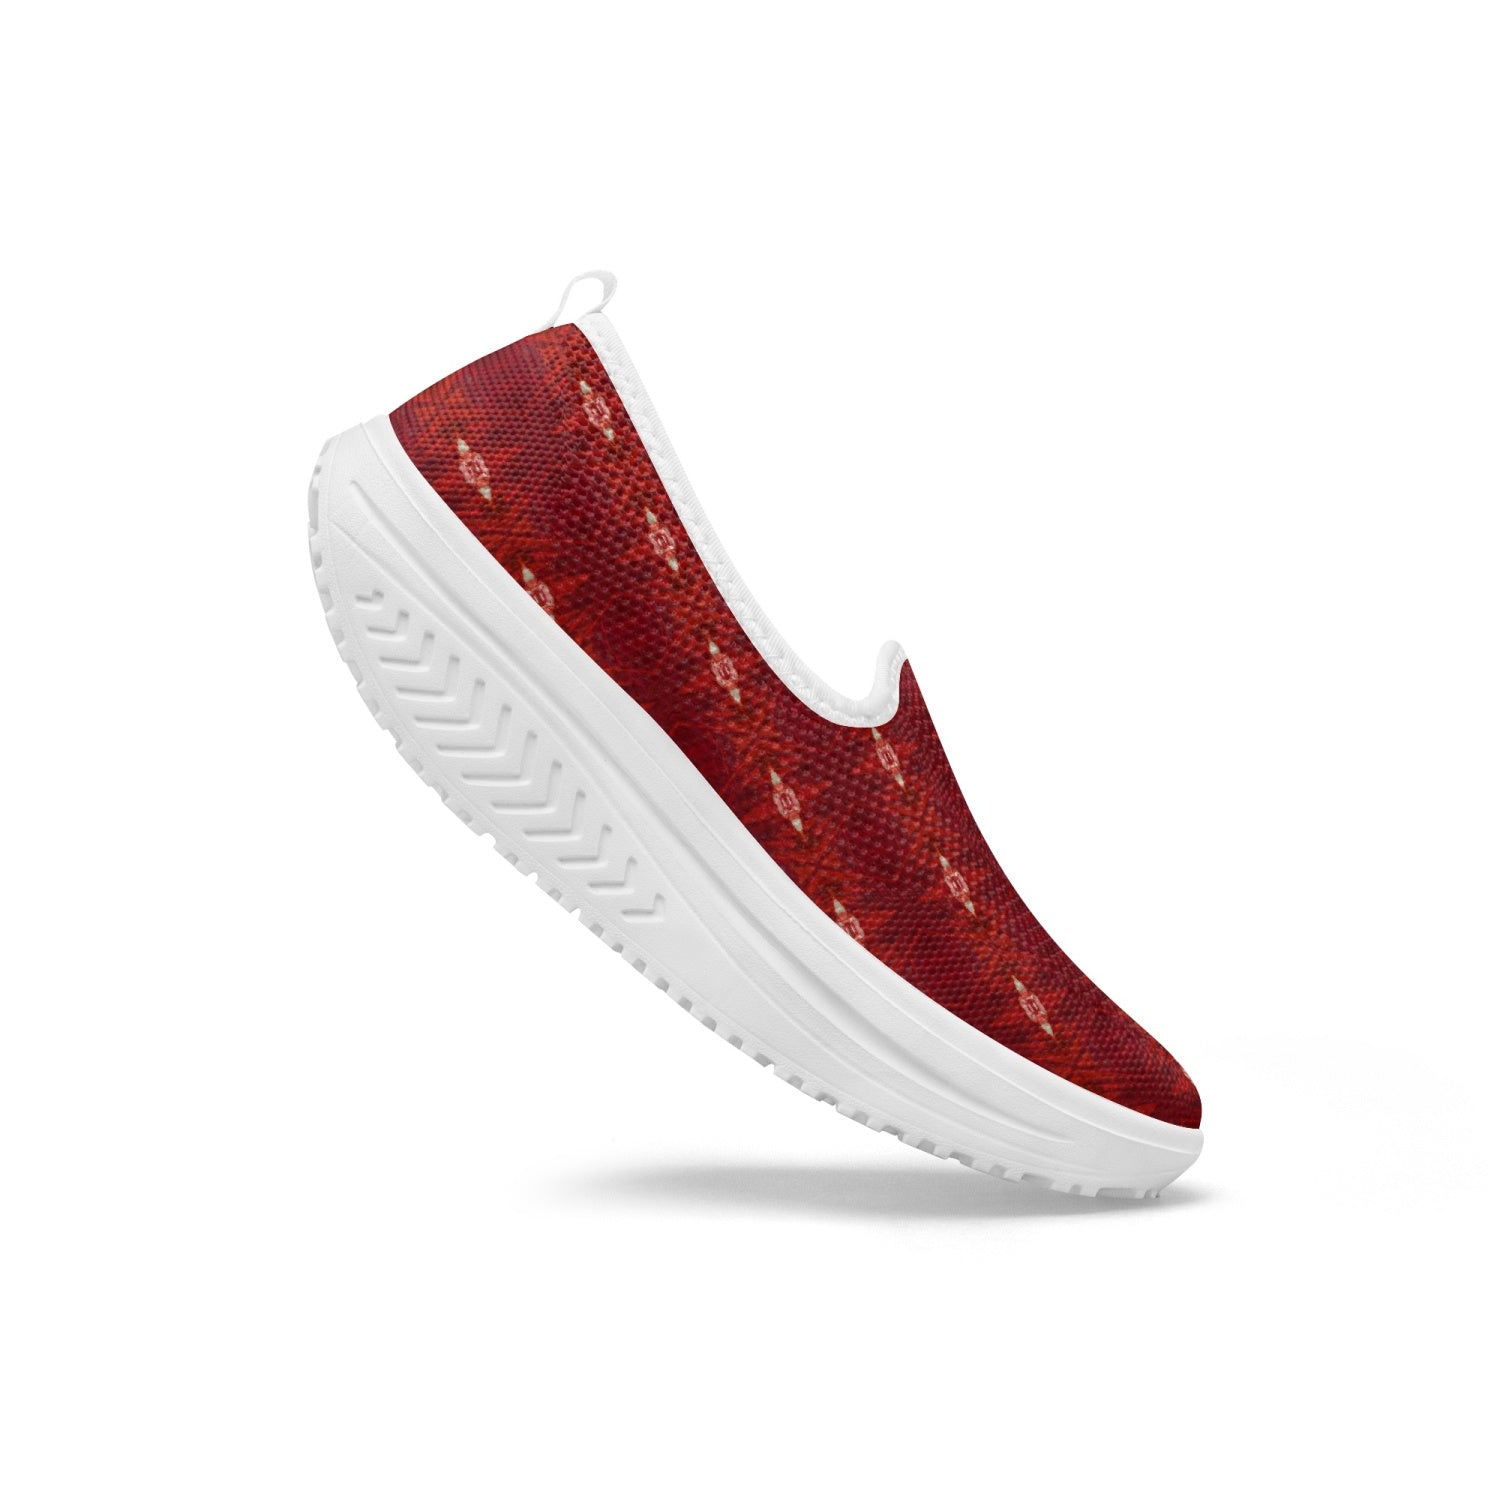 Gordeous Red Women's Slip-On Mesh Rocking Shoes, by Sensus Studio Design